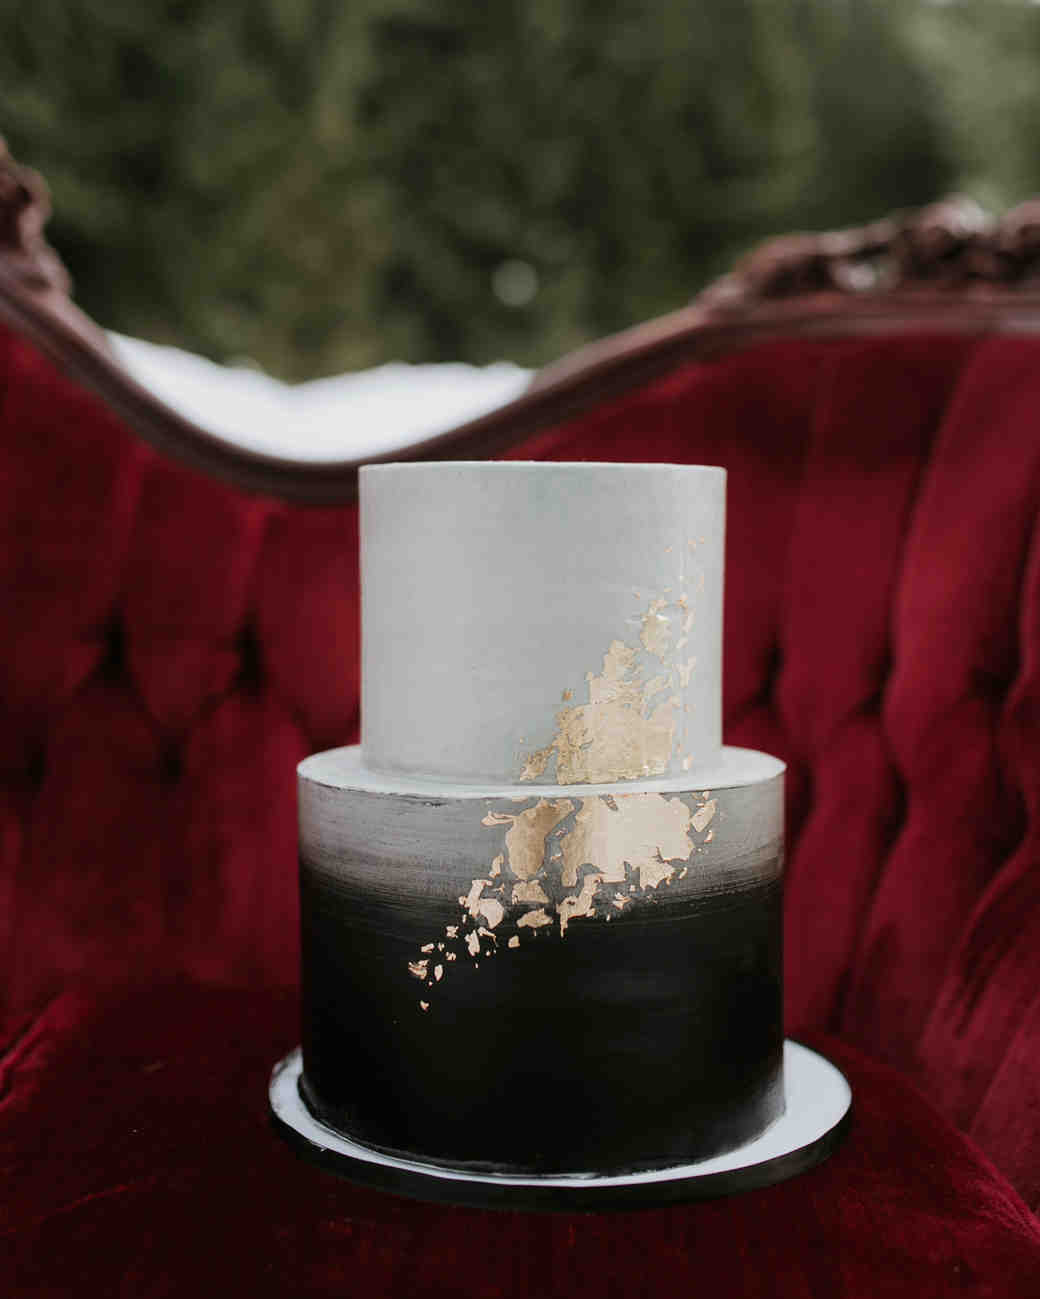 Winter Wedding Cake Designs